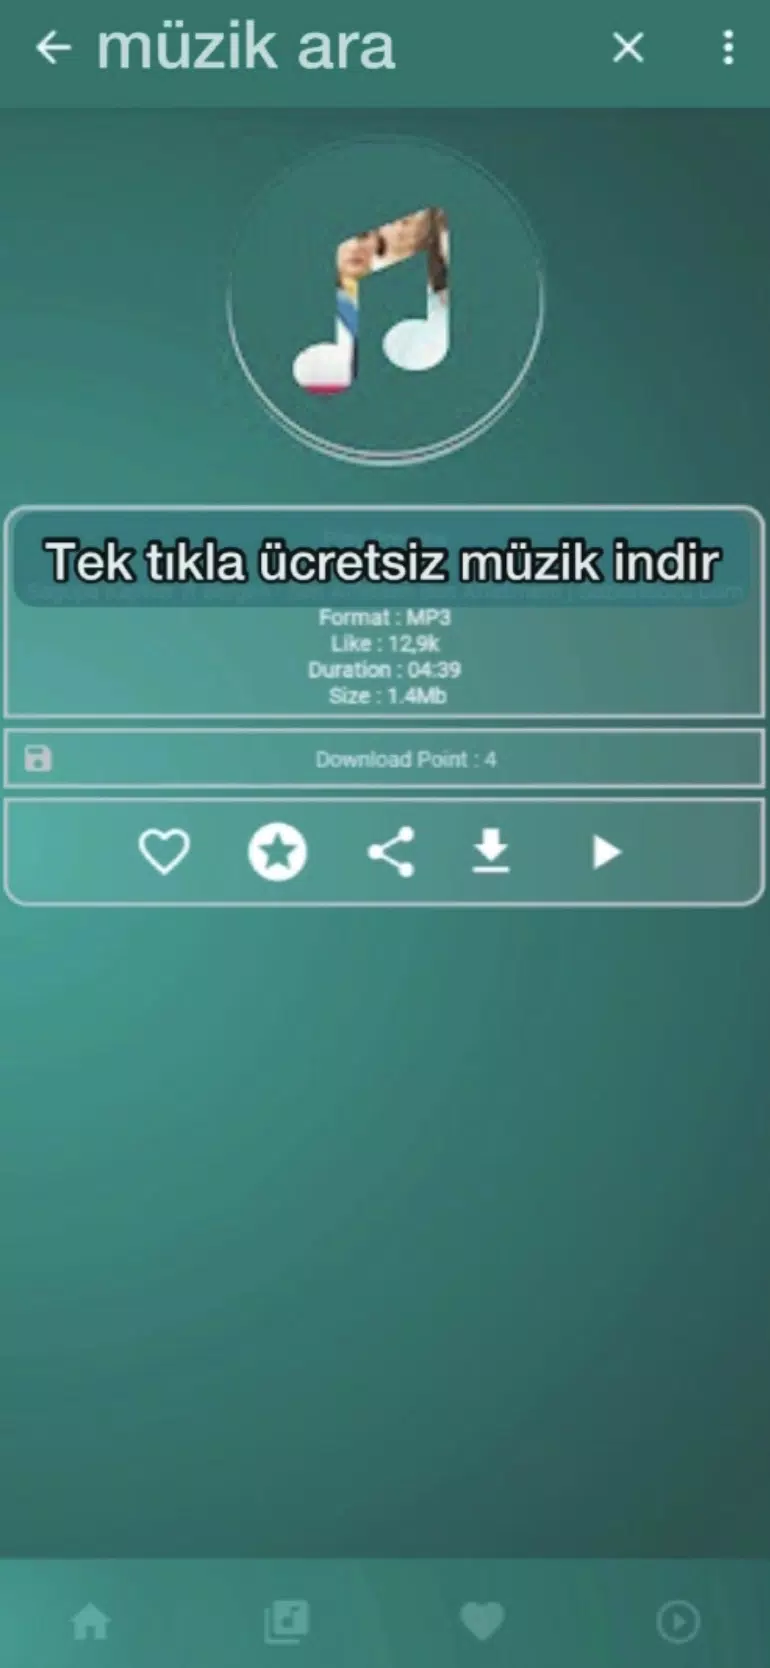 Net Müzik - Bedava Müzik ve Mp3 indir APK für Android herunterladen